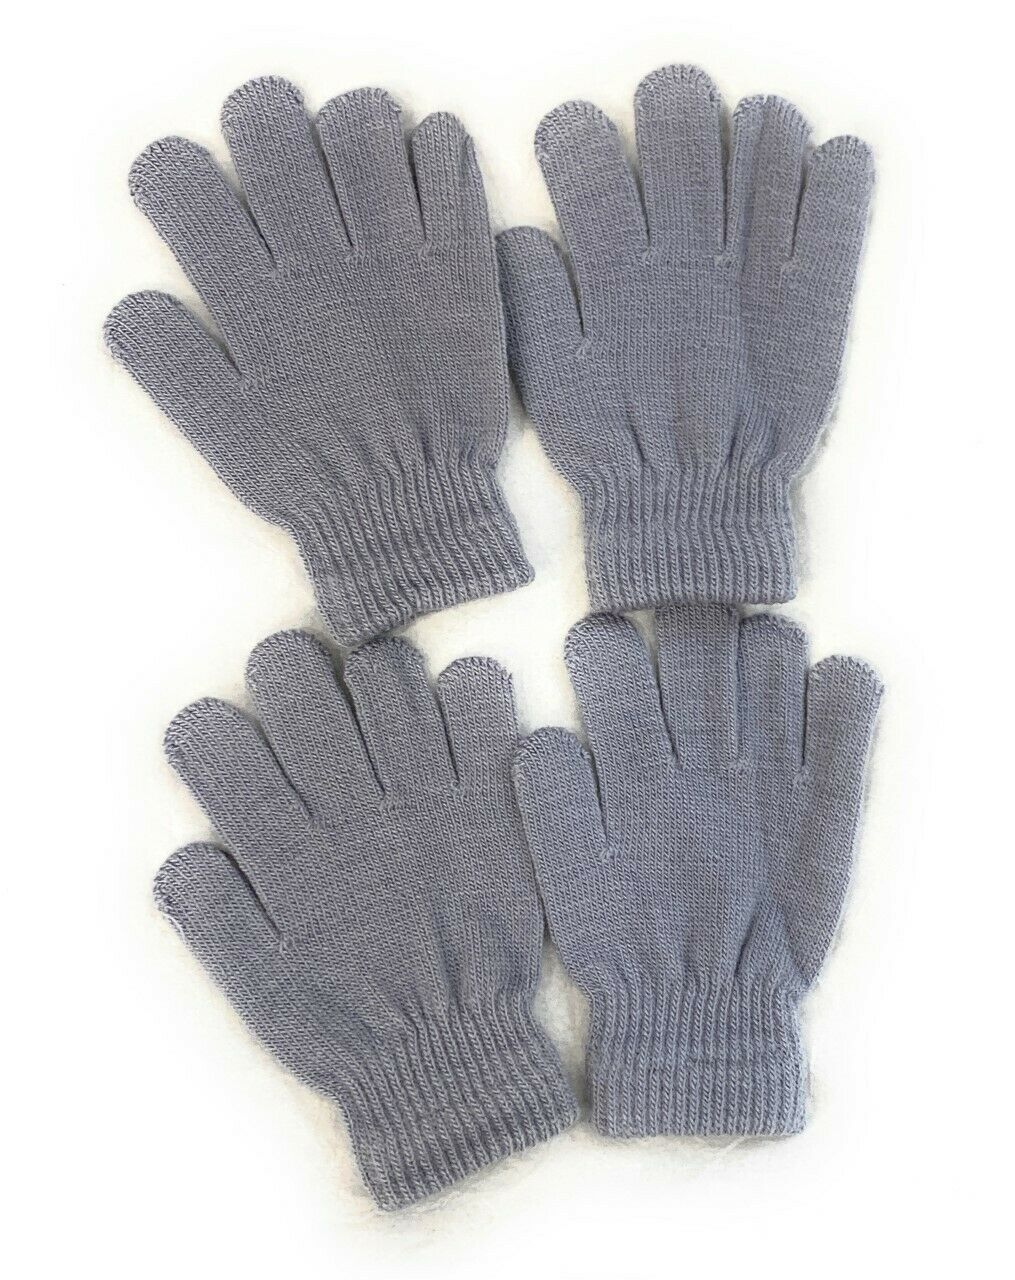 2 Pairs of Kids Children's Magic Primary School Gloves Winter Warm Stretchy UK